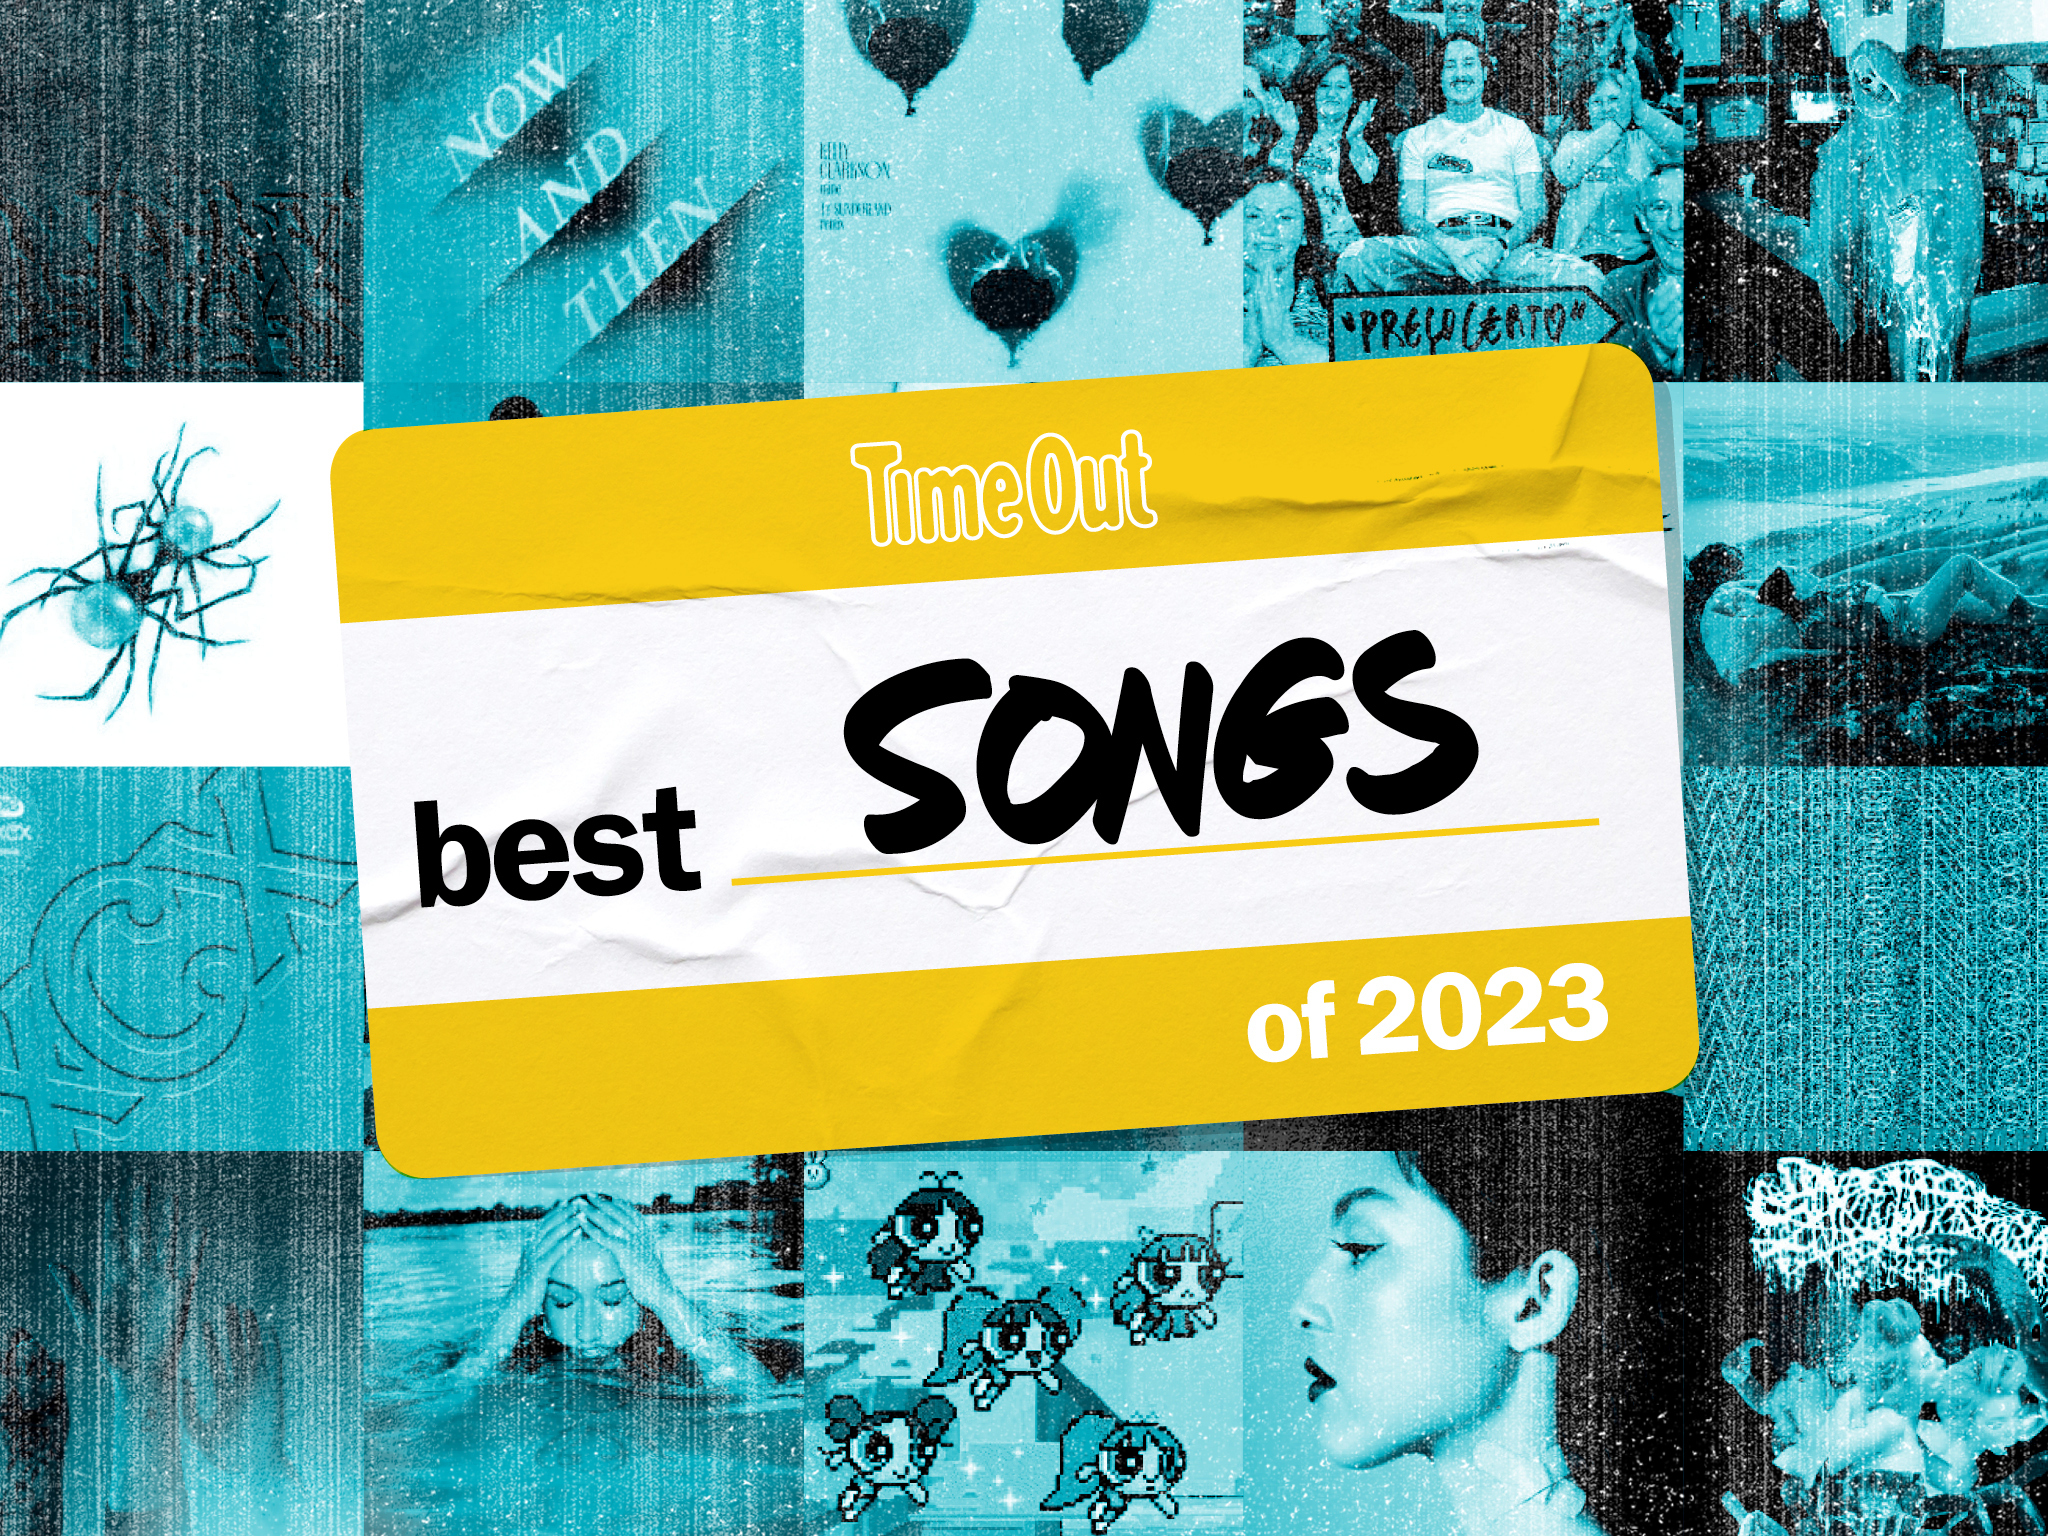 CAS Heavenly lyrics in 2023  Song recommendations, Lyrics, Spotify